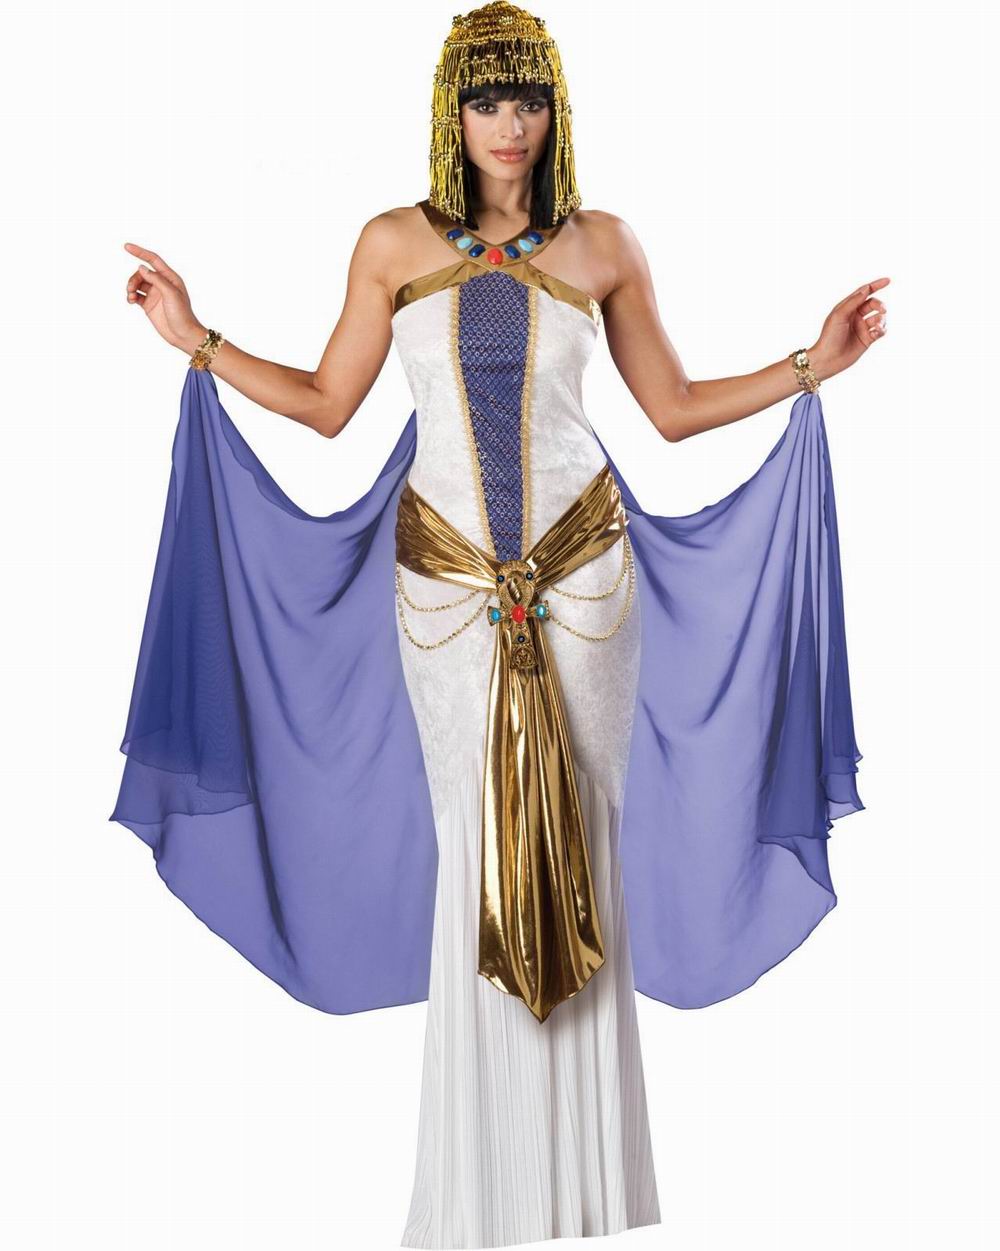 Jewel Of the Nile Elite Costume